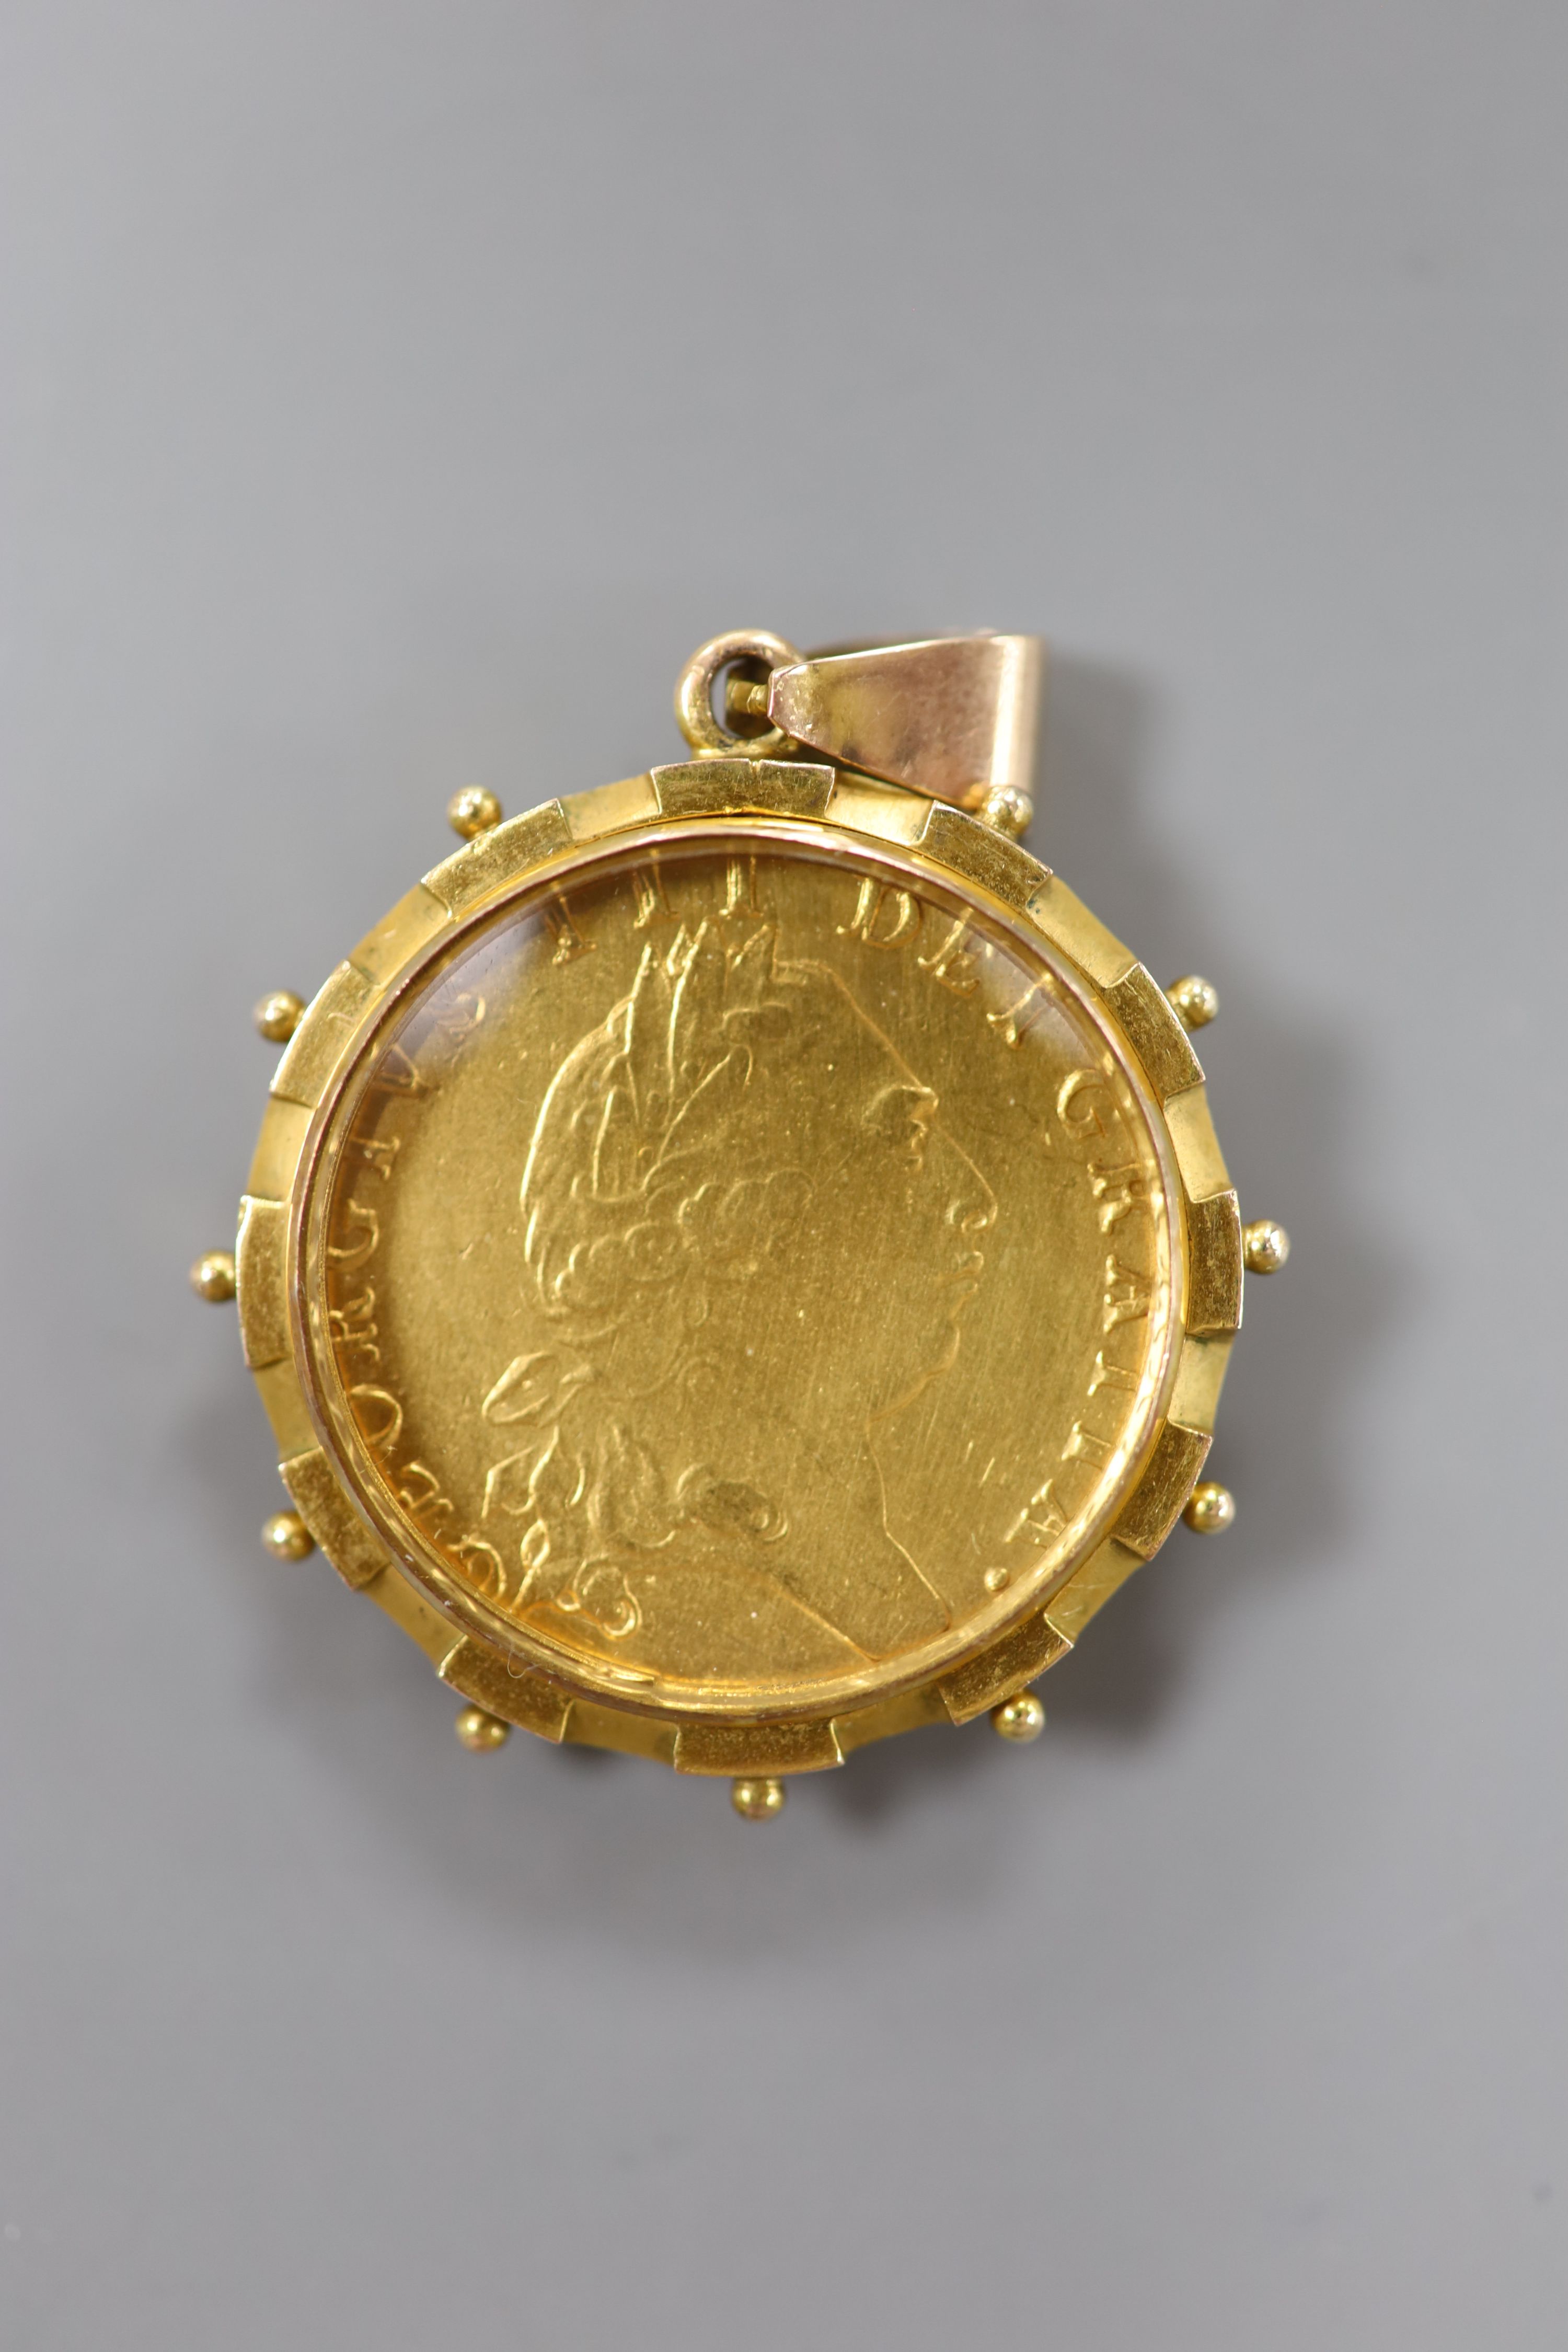 A George III spade guinea, 1794 in a glazed 9ct gold mount, gross 17.2 grams.